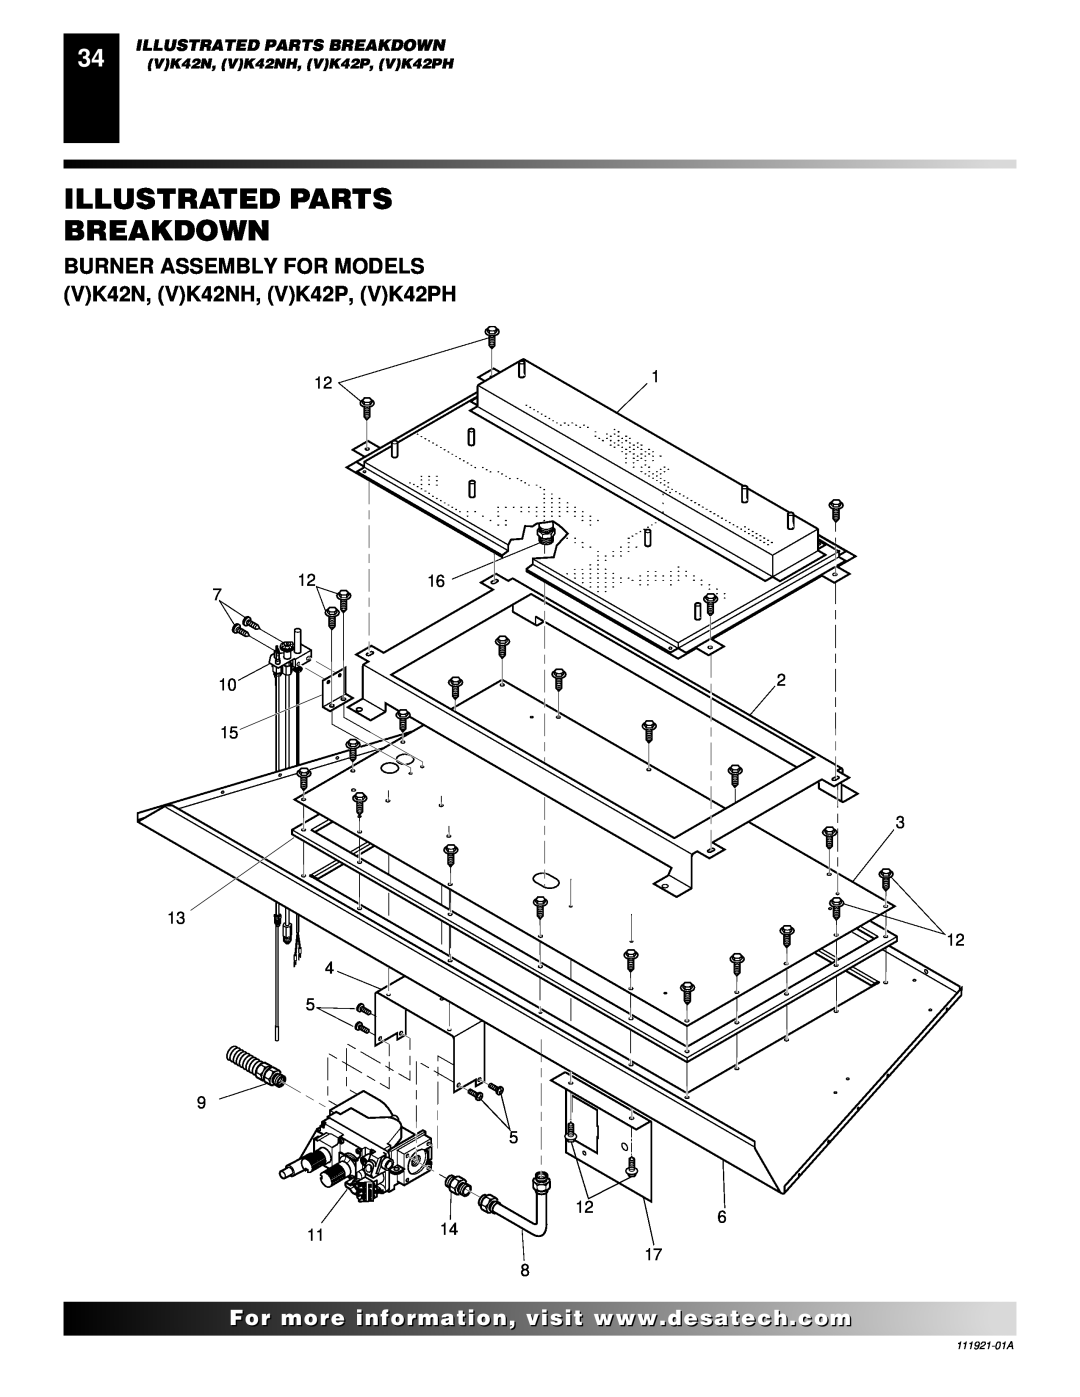 Desa (V)K42N installation manual Illustrated Parts Breakdown, VK42N, VK42NH, VK42P, VK42PH, 111921-01A, Tpth Tp Th 